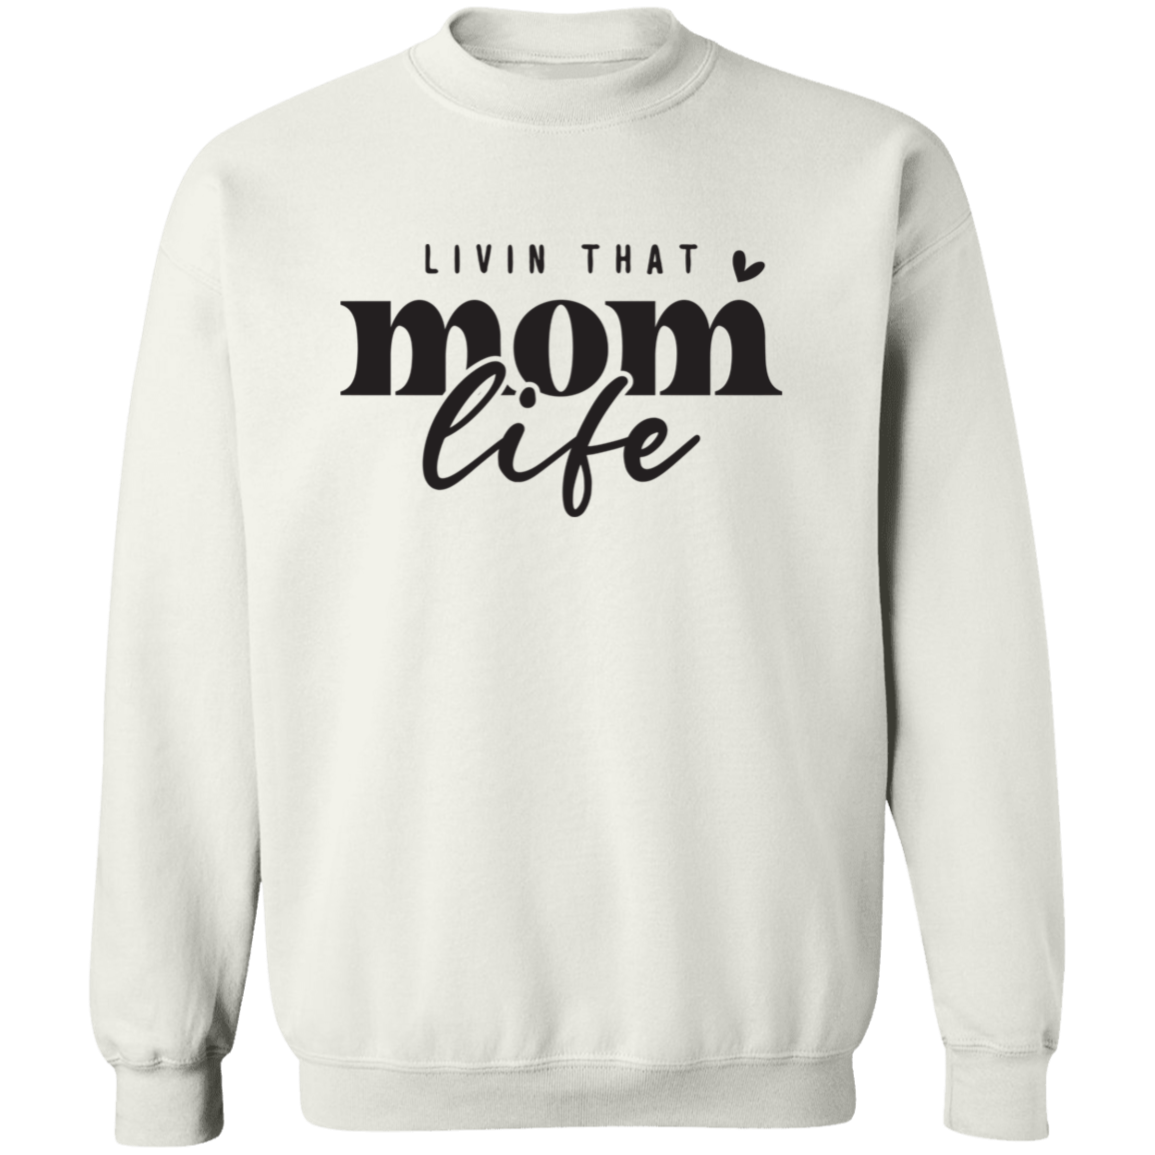 "Livin that Mom Life" Crewneck Pullover Sweatshirt